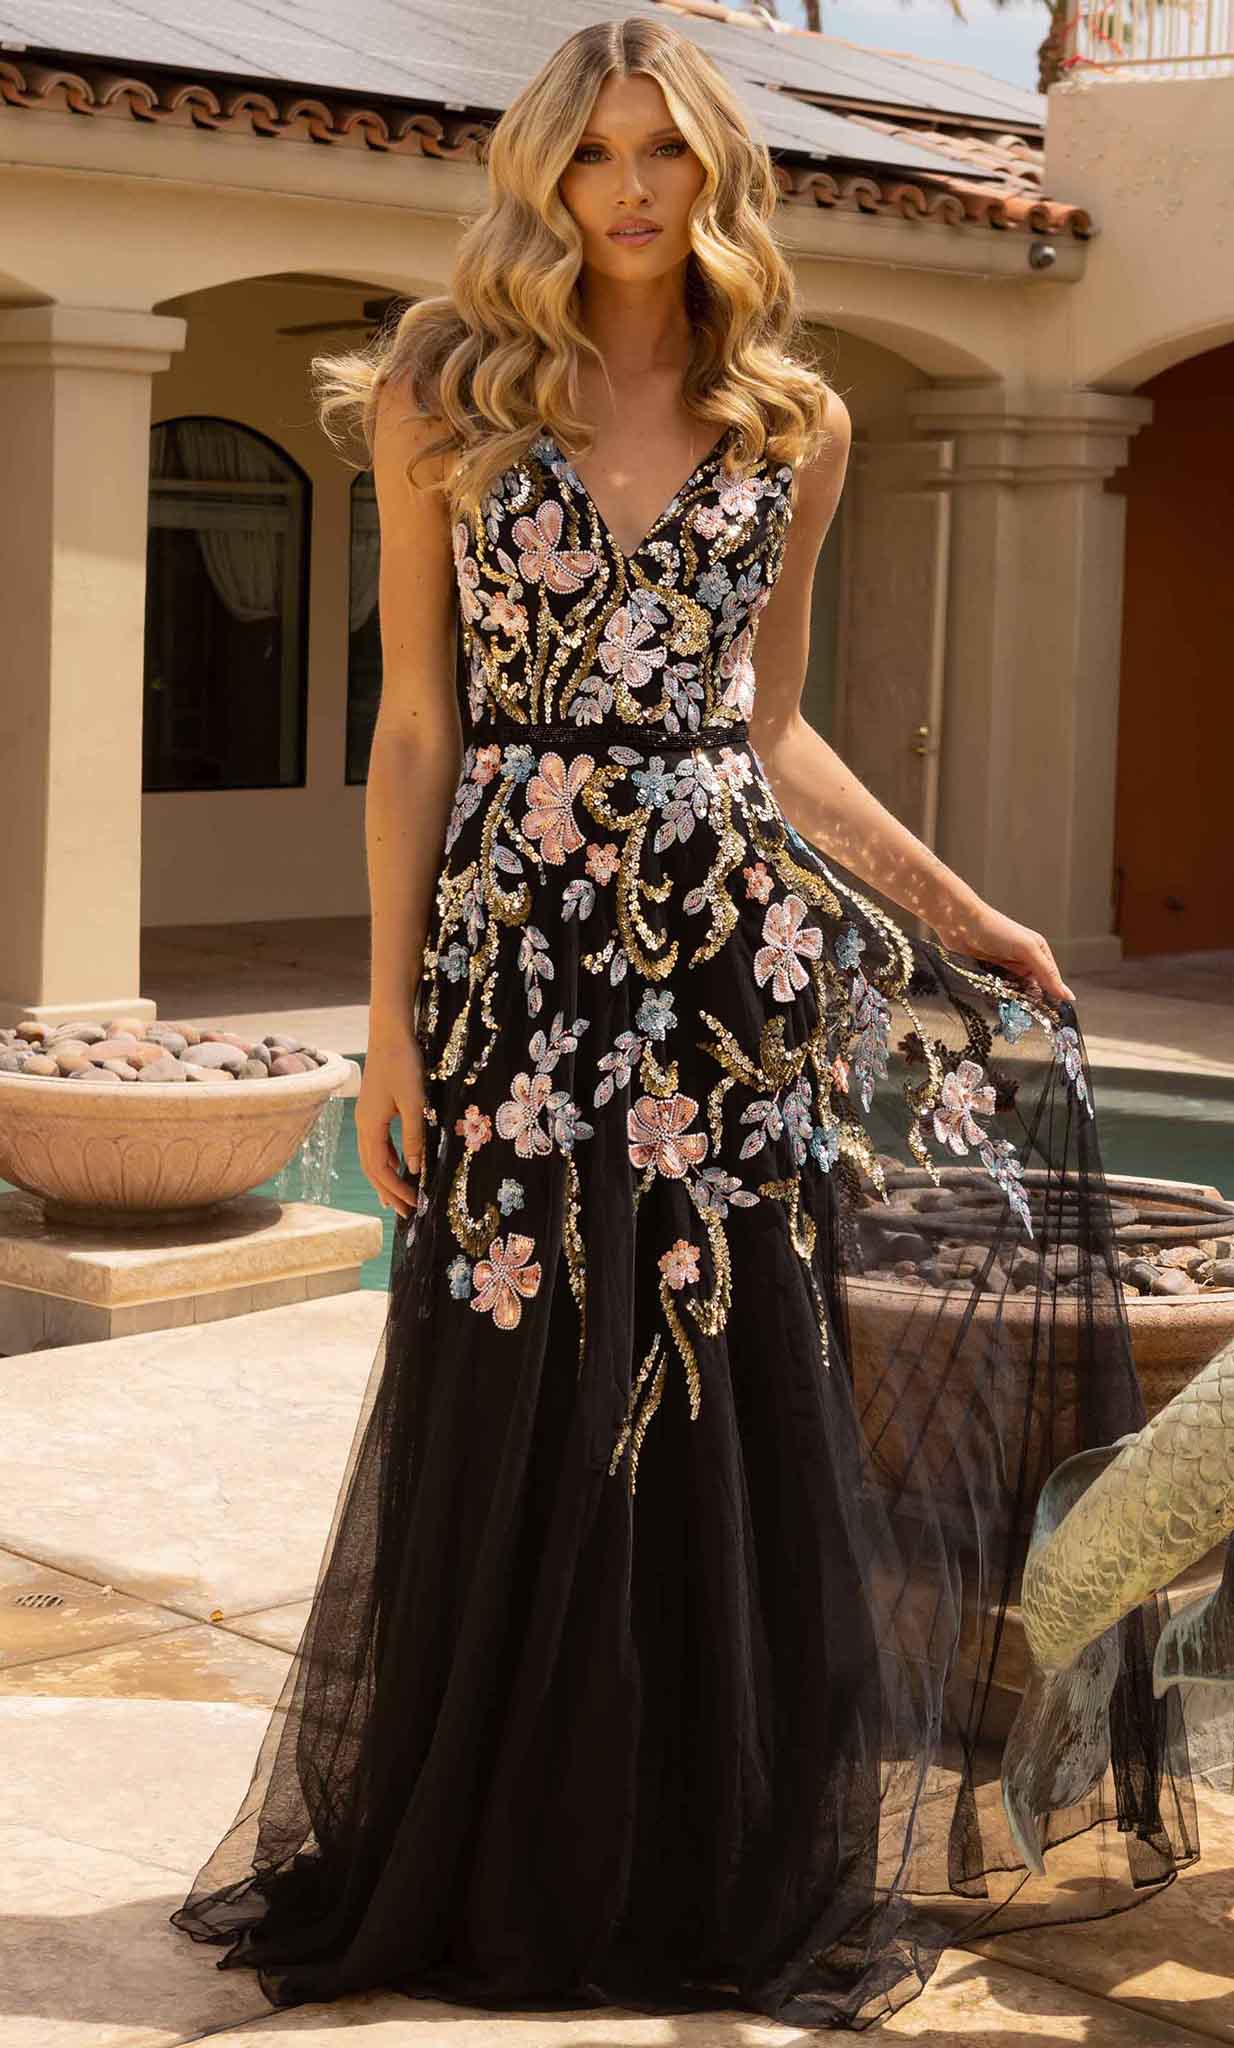 Primavera Couture 3929 - Floral Patterned Embellished Tulle Gown Prom Dresses 000 / Black